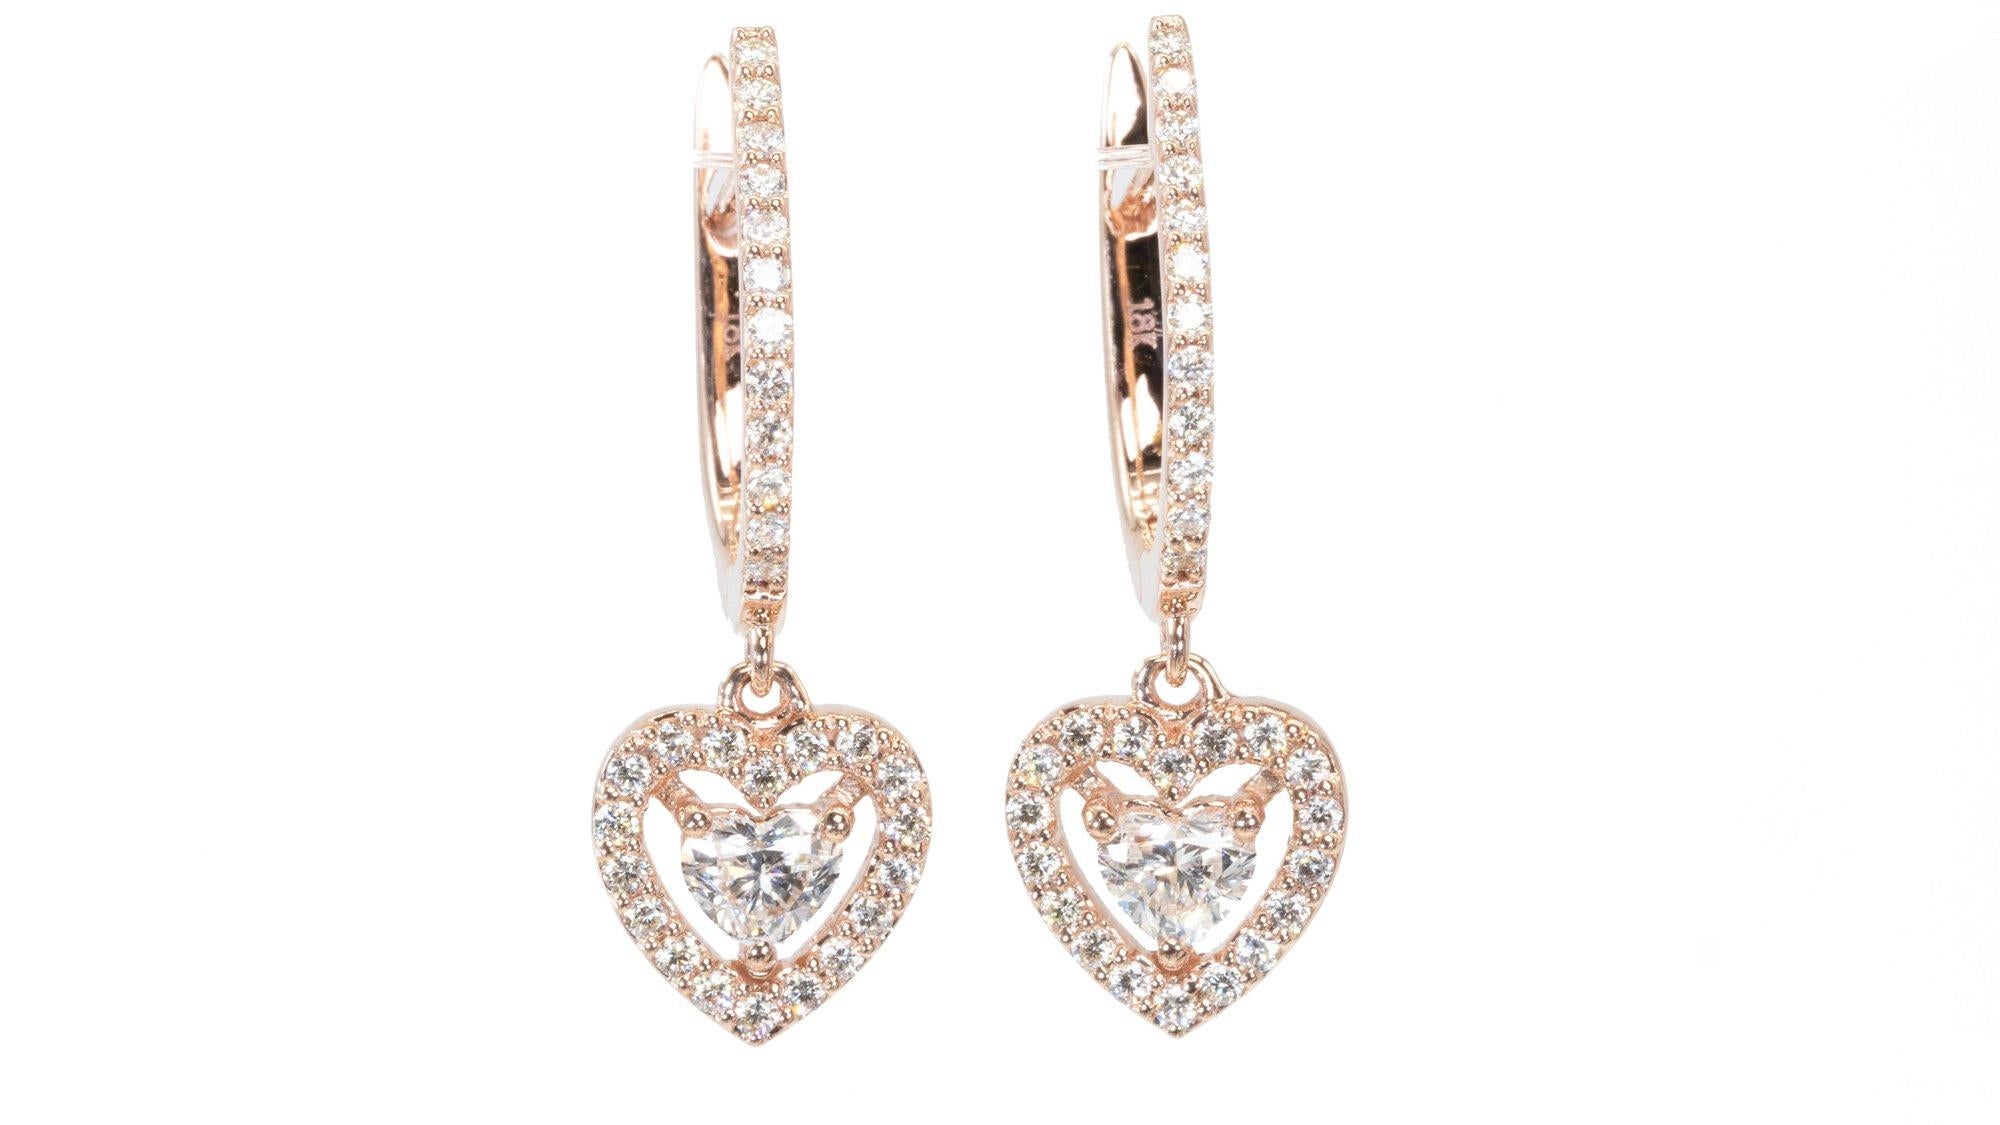 Heart Cut Gorgeous 18k Rose Gold Drop Earrings w/ 0.60ct Natural Diamonds, AIG Certificate